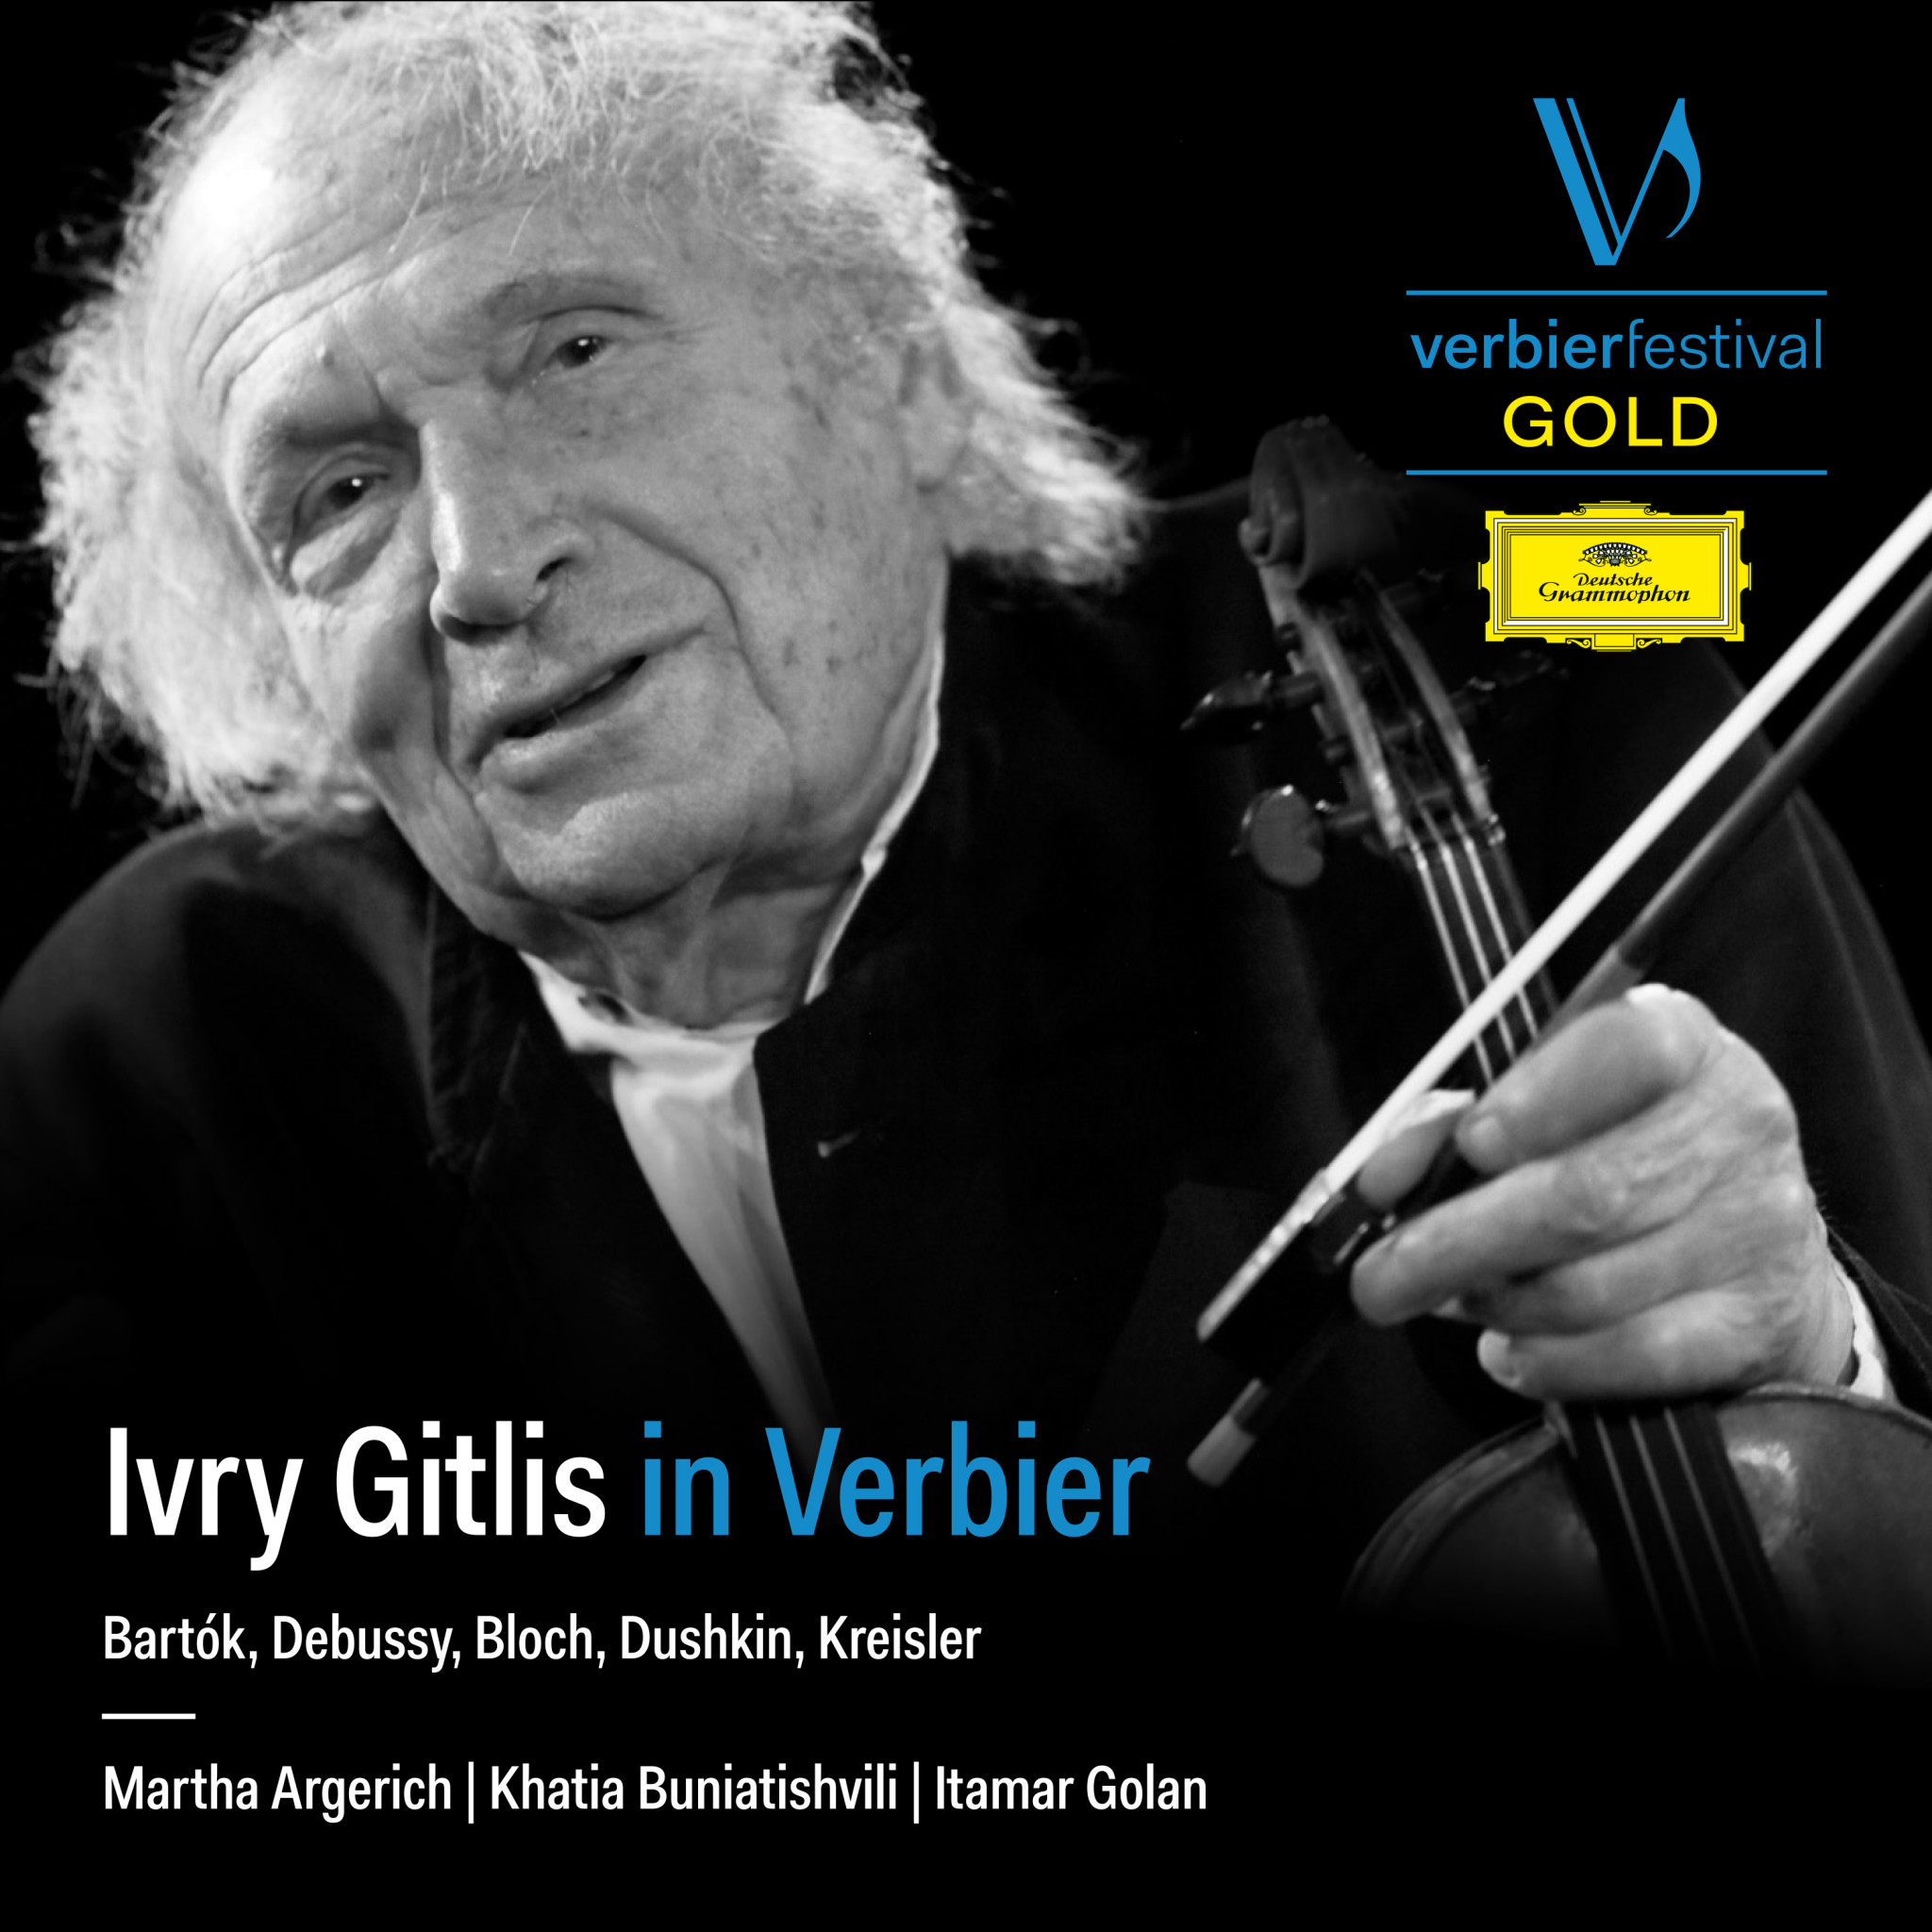 Argerich: Ivry Gitlis in Verbier 